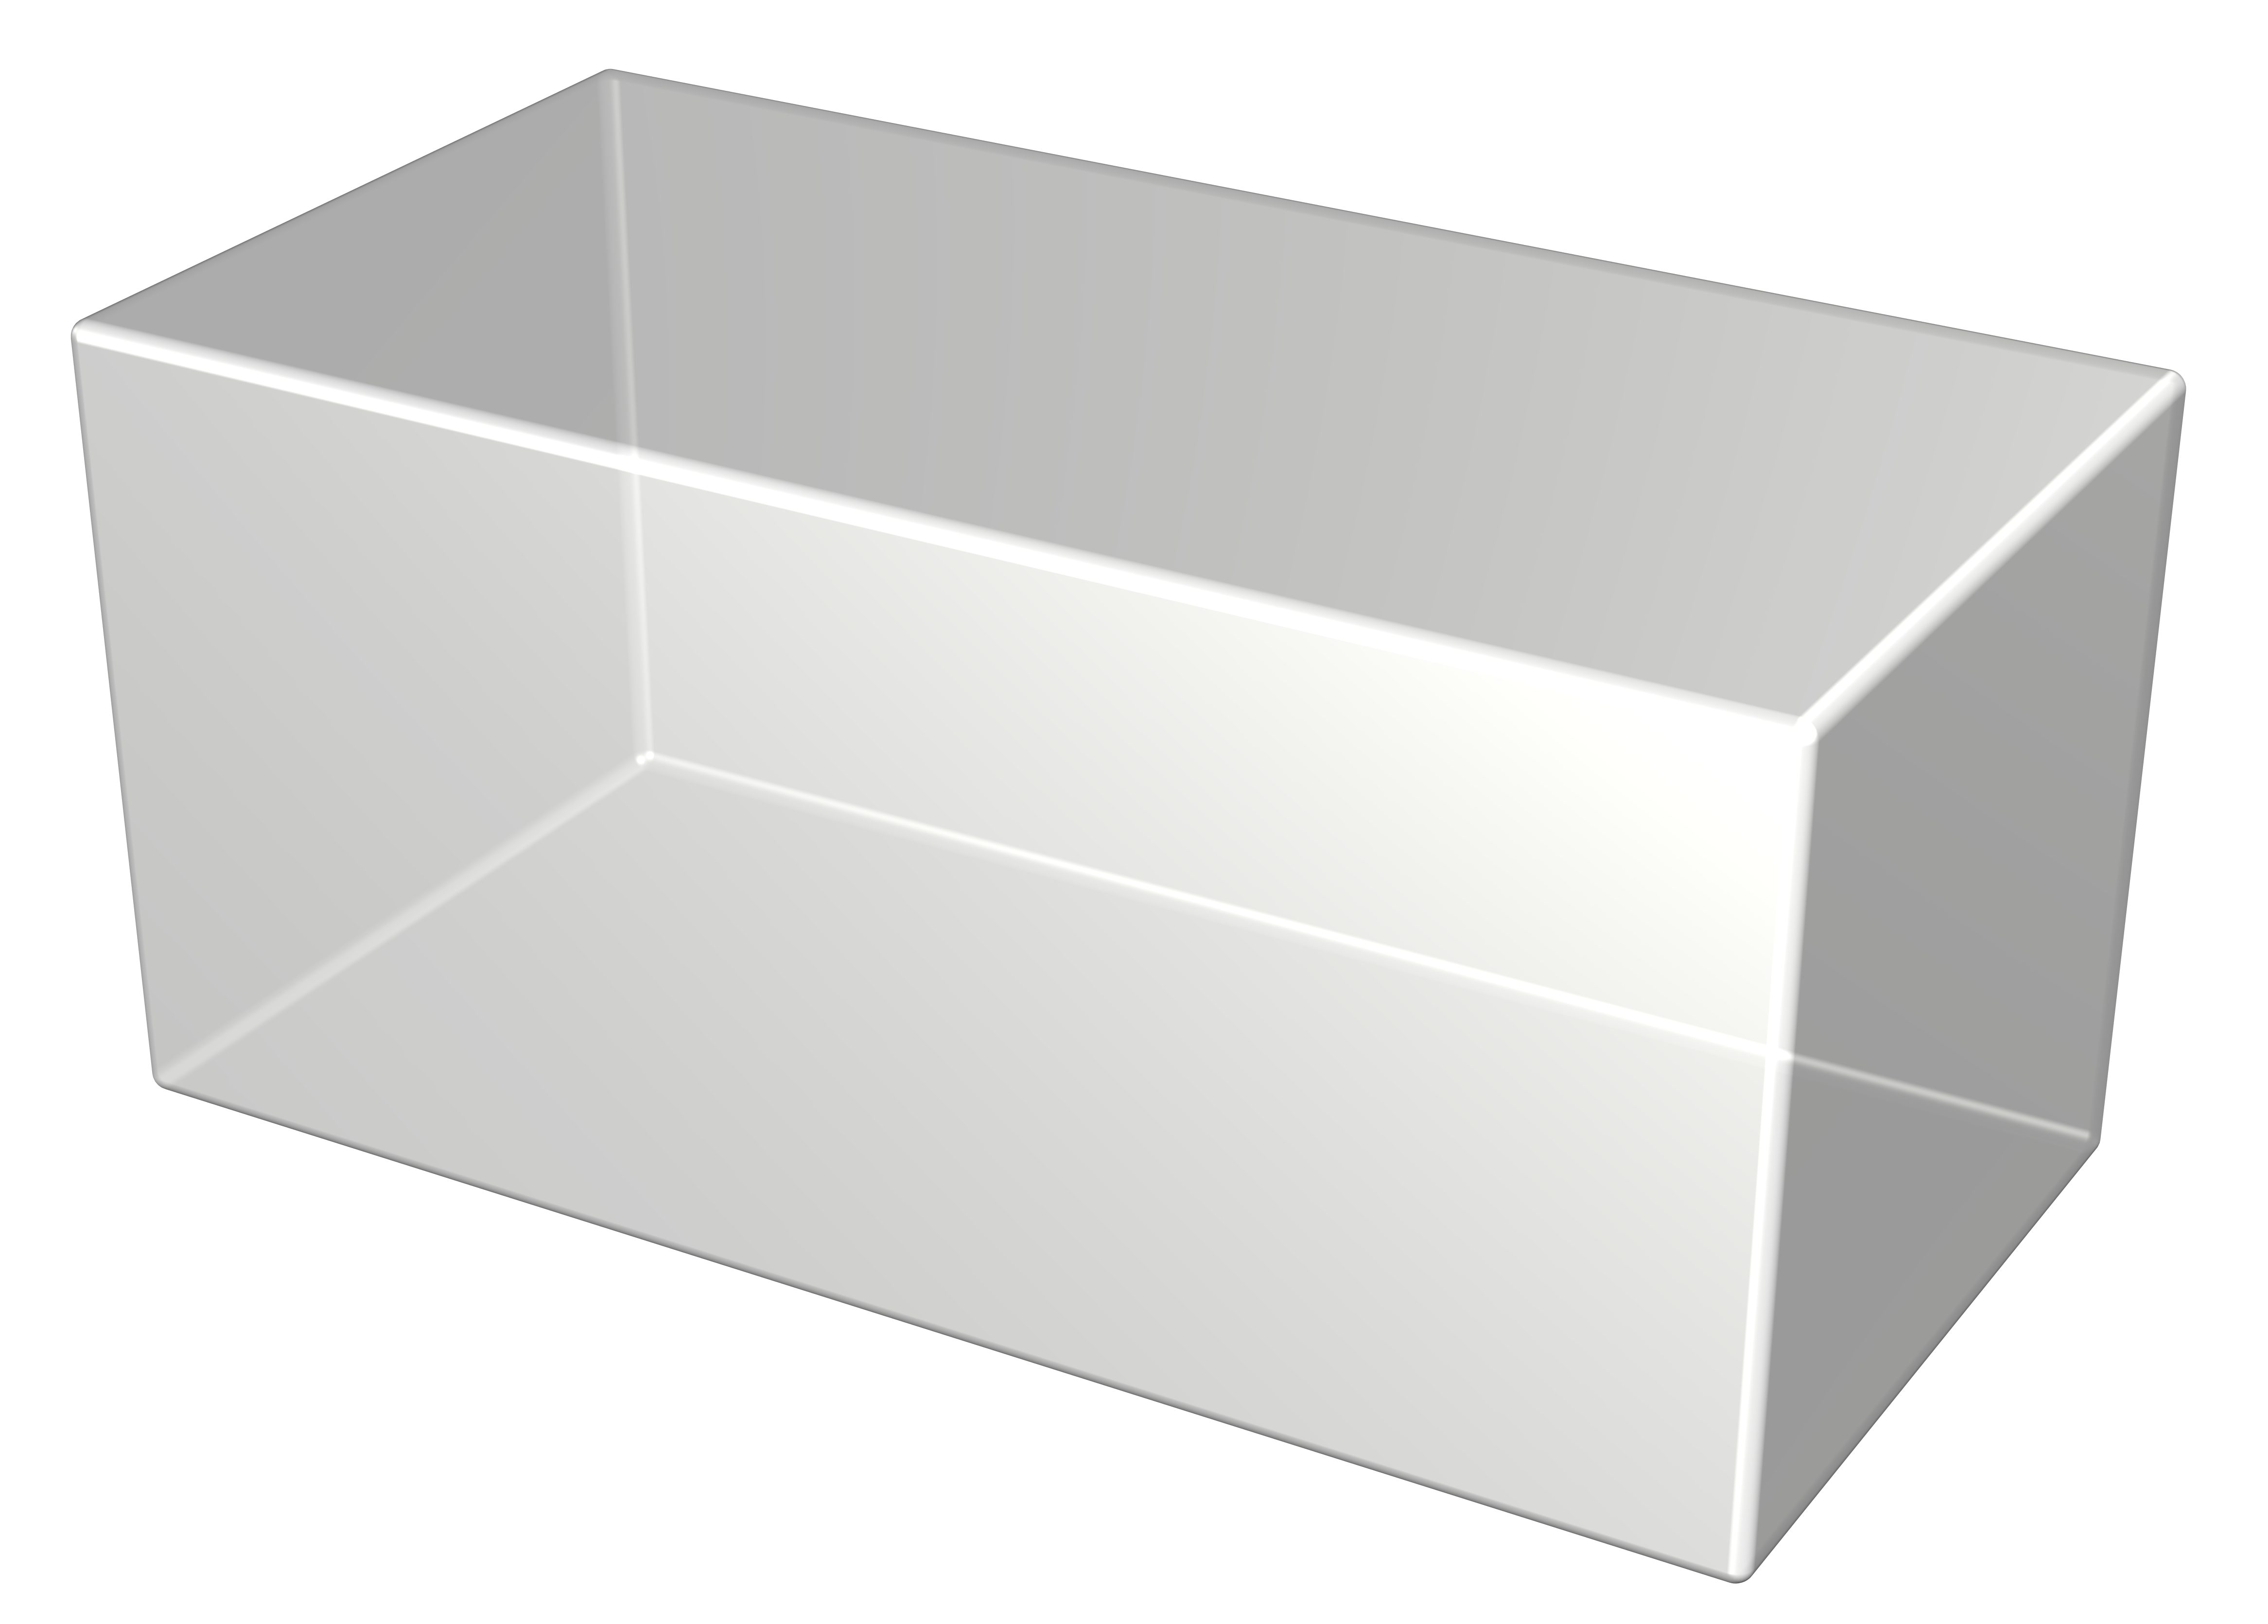 square clipart rectangle